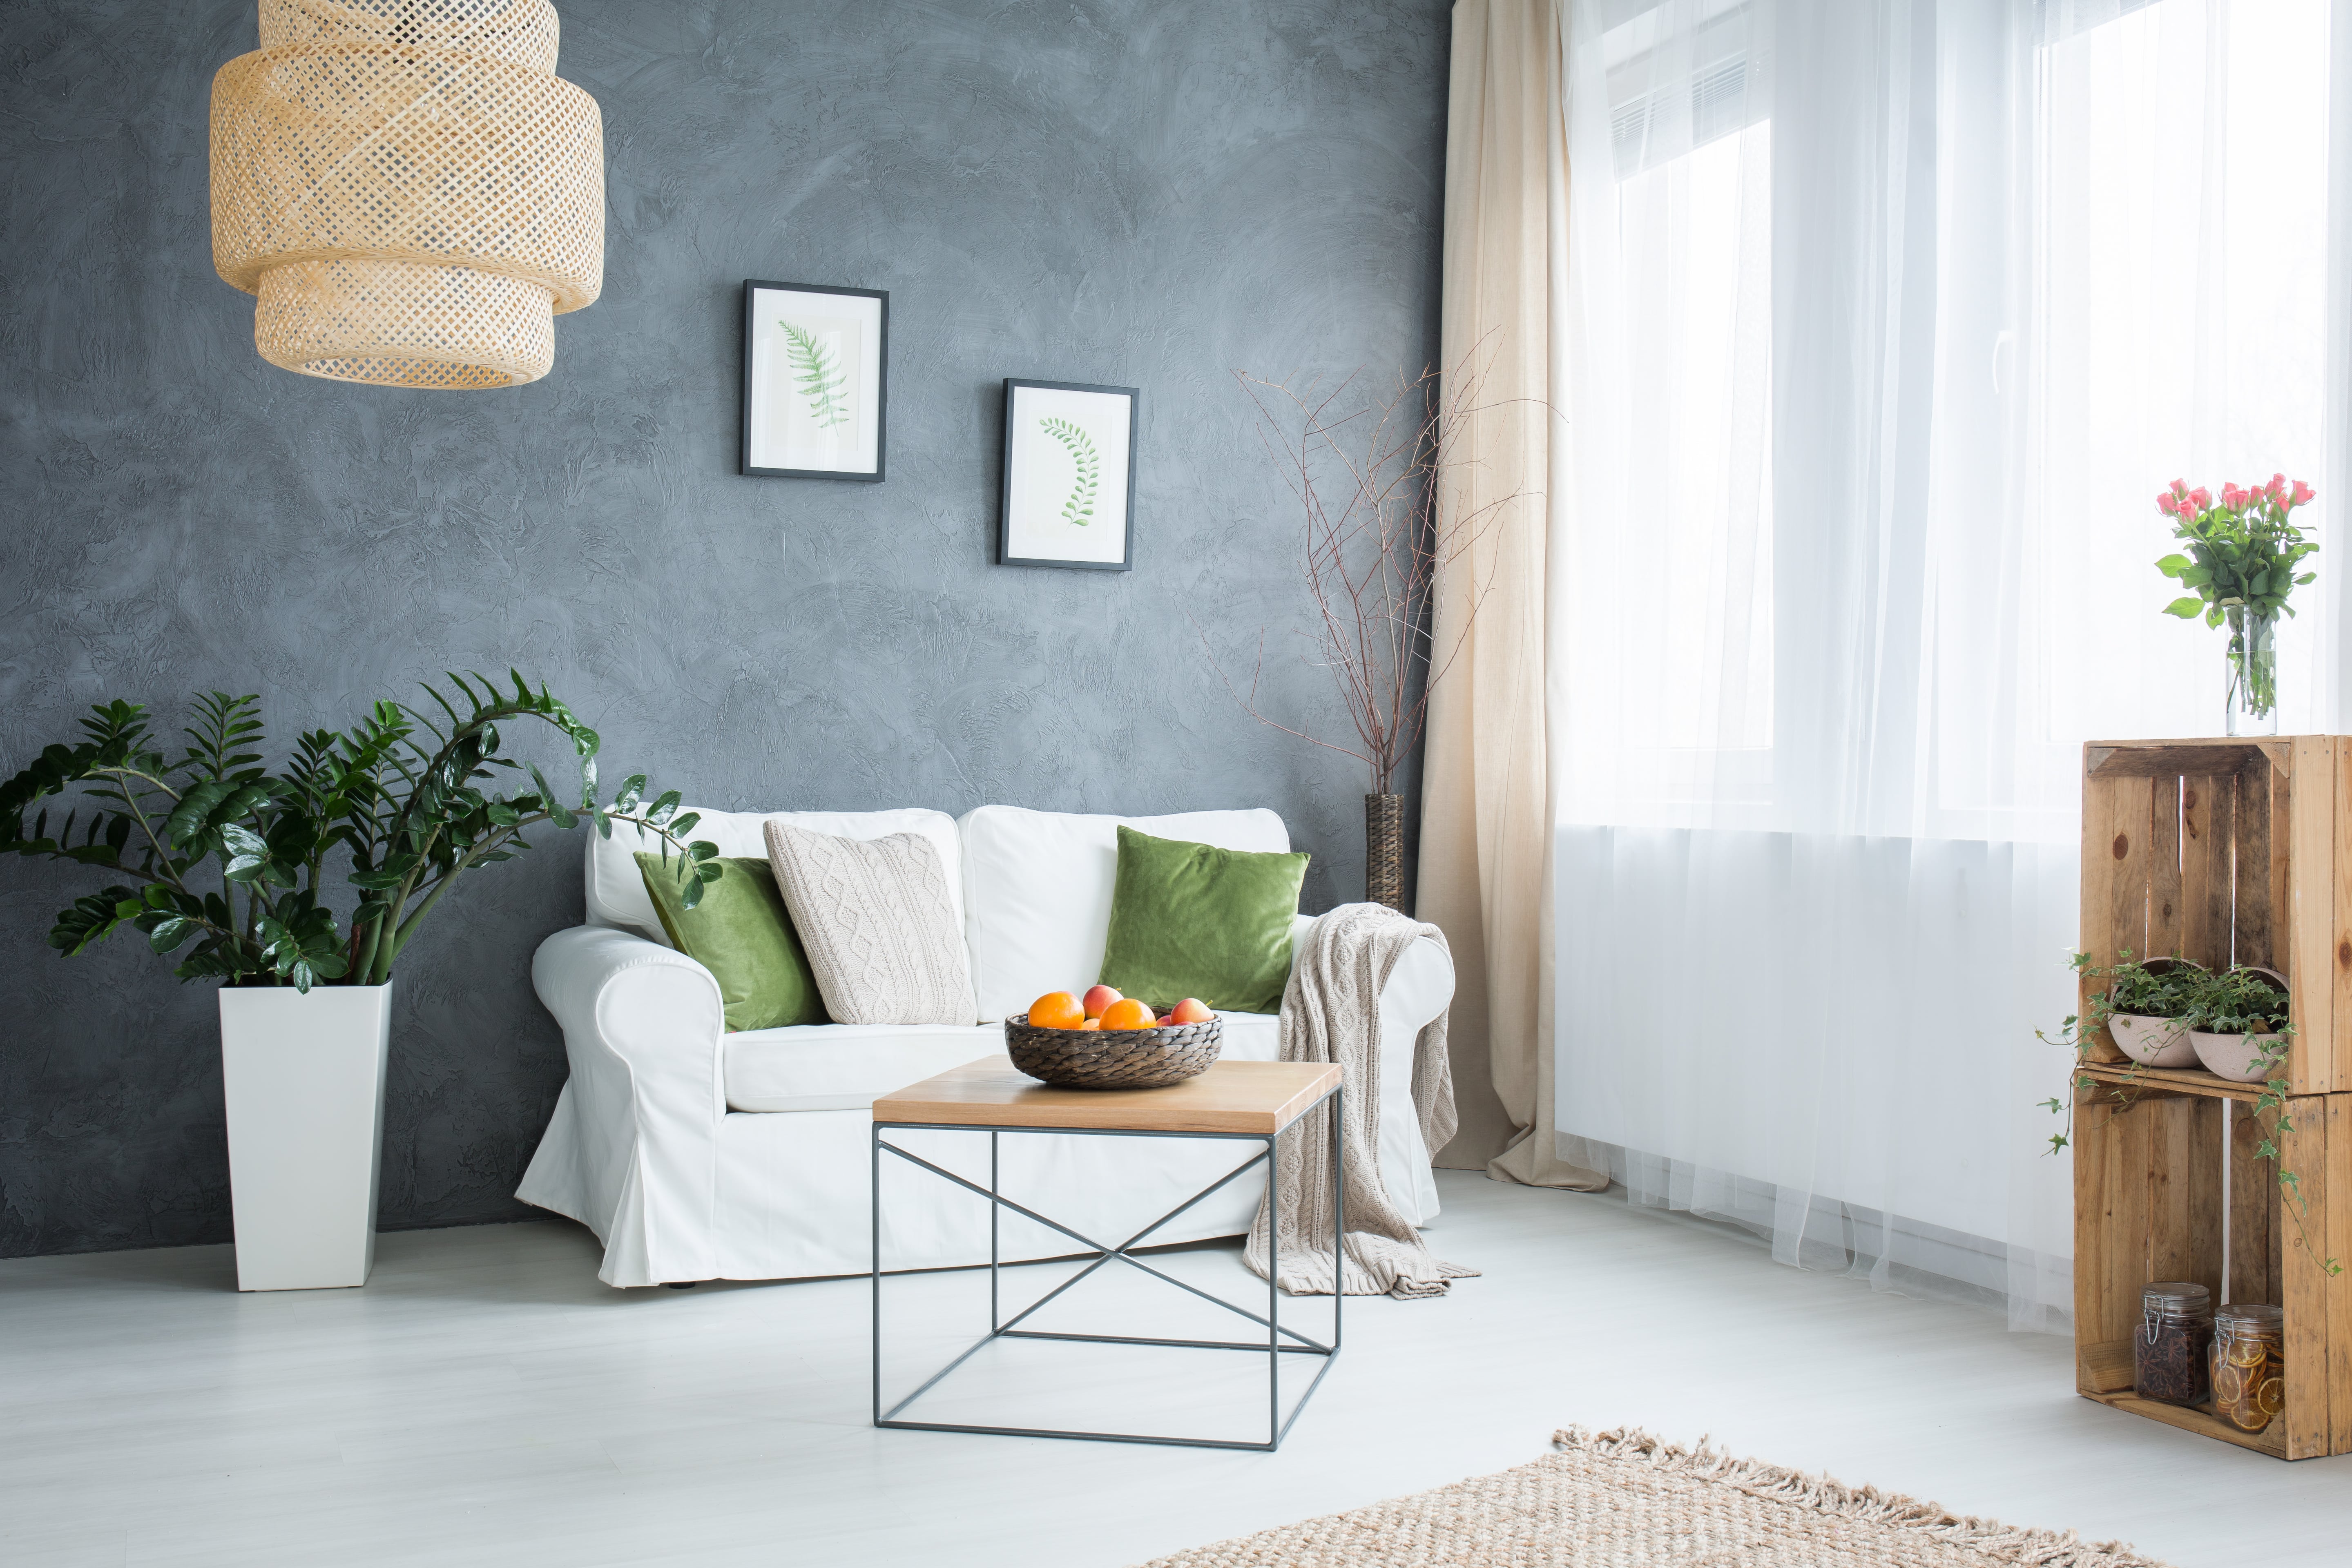 grey-living-room-with-sofa-PYYRDXM-min_1